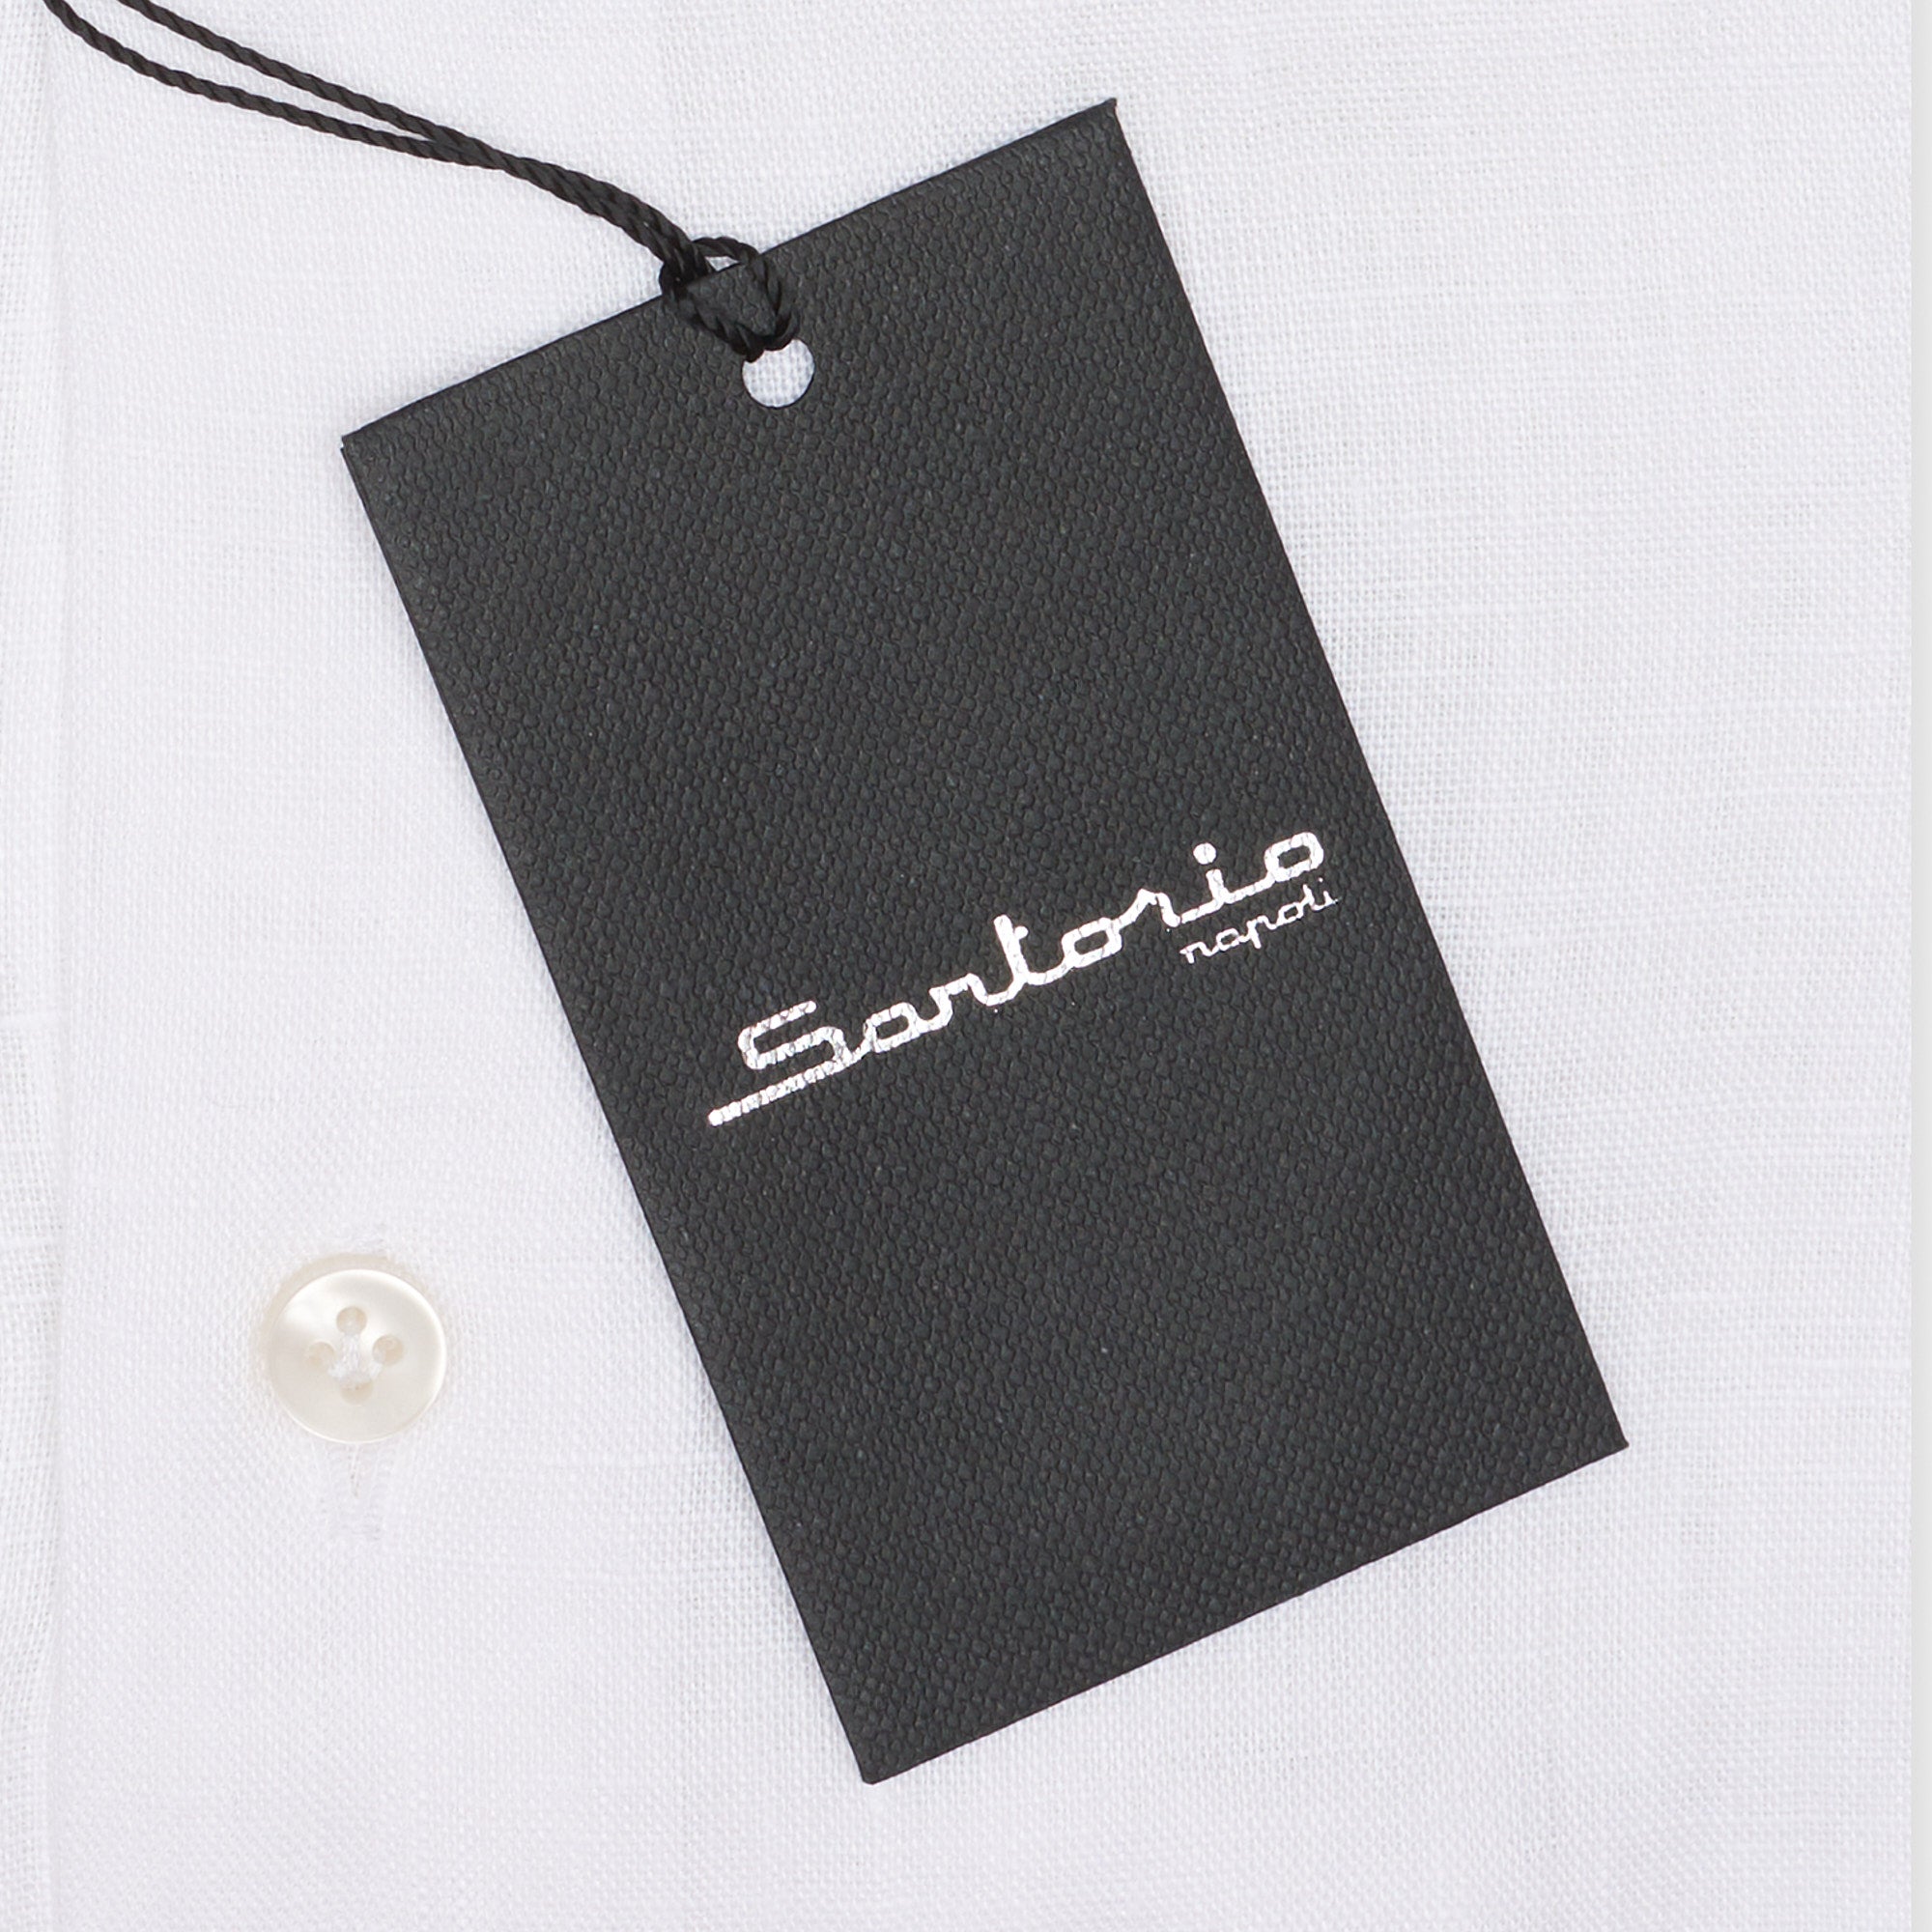 SARTORIO Napoli by KITON White Linen Spread Collar Shirt Slim Fit NEW